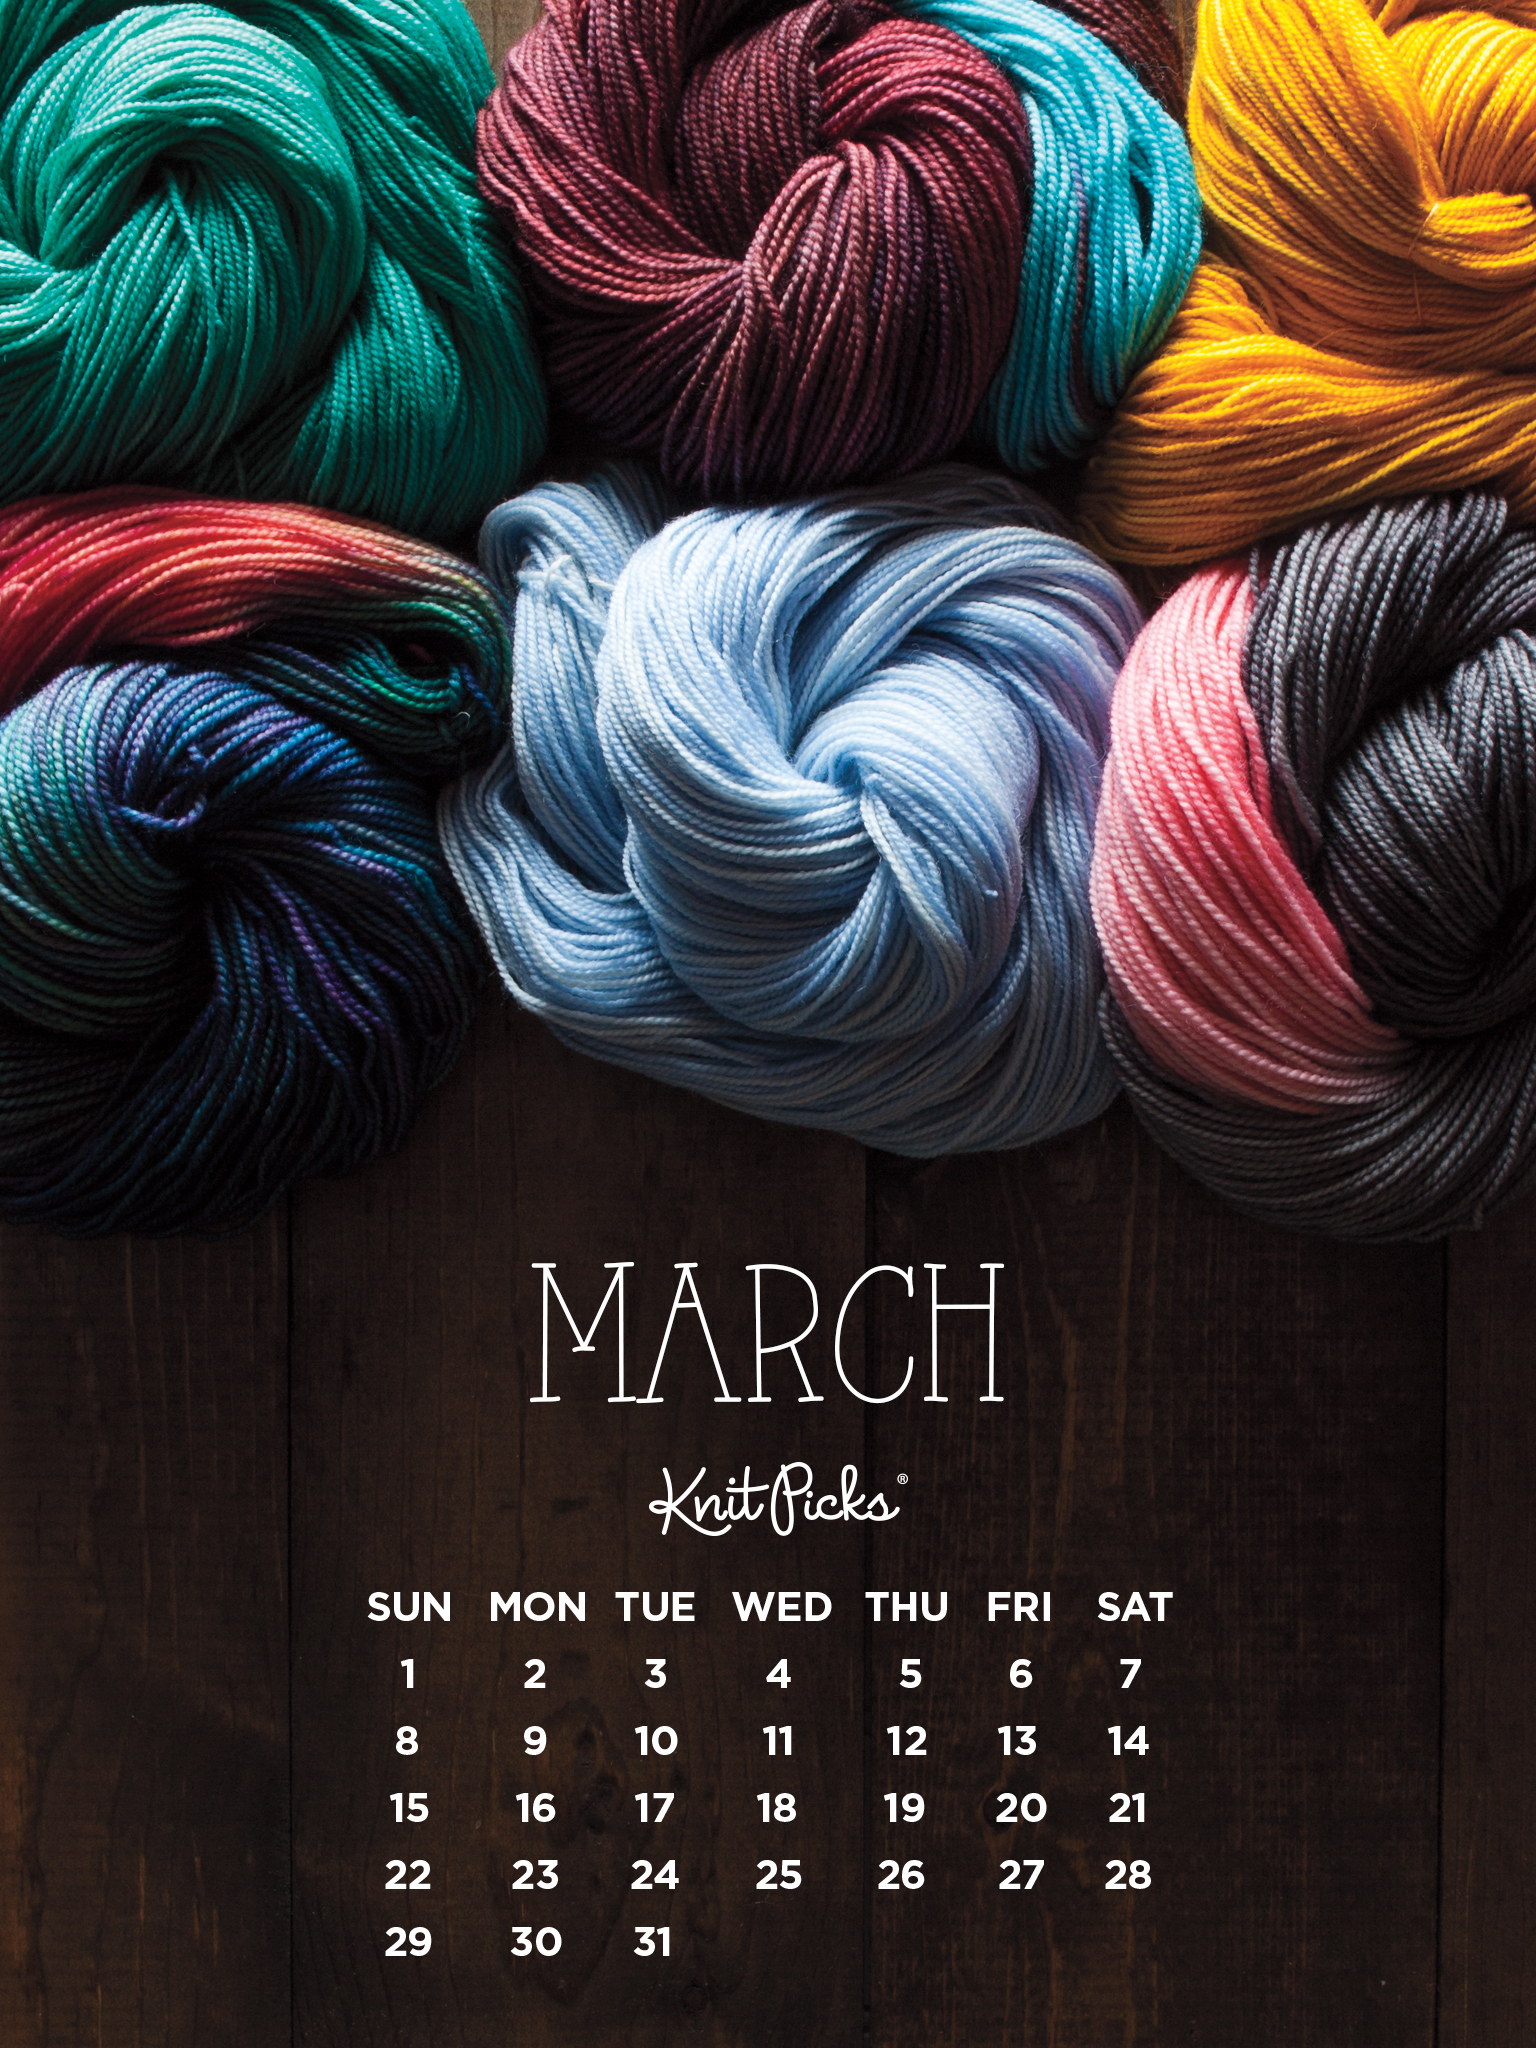 March 2015 Wallpaper Calendar Knitpicks Staff Knitting Blog